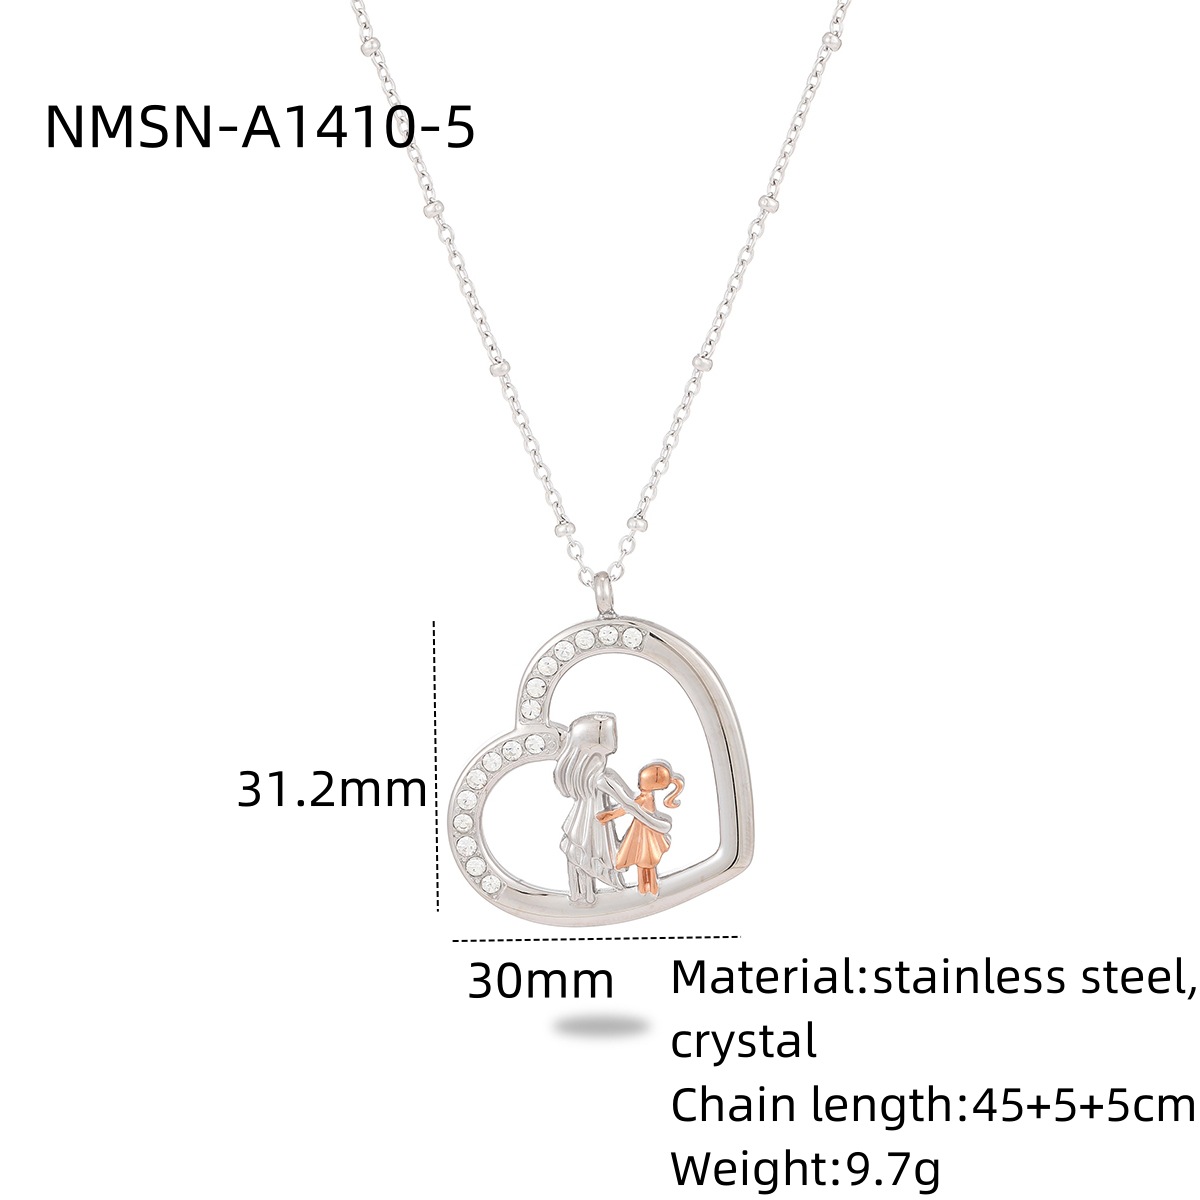 NMSN-A1410-5